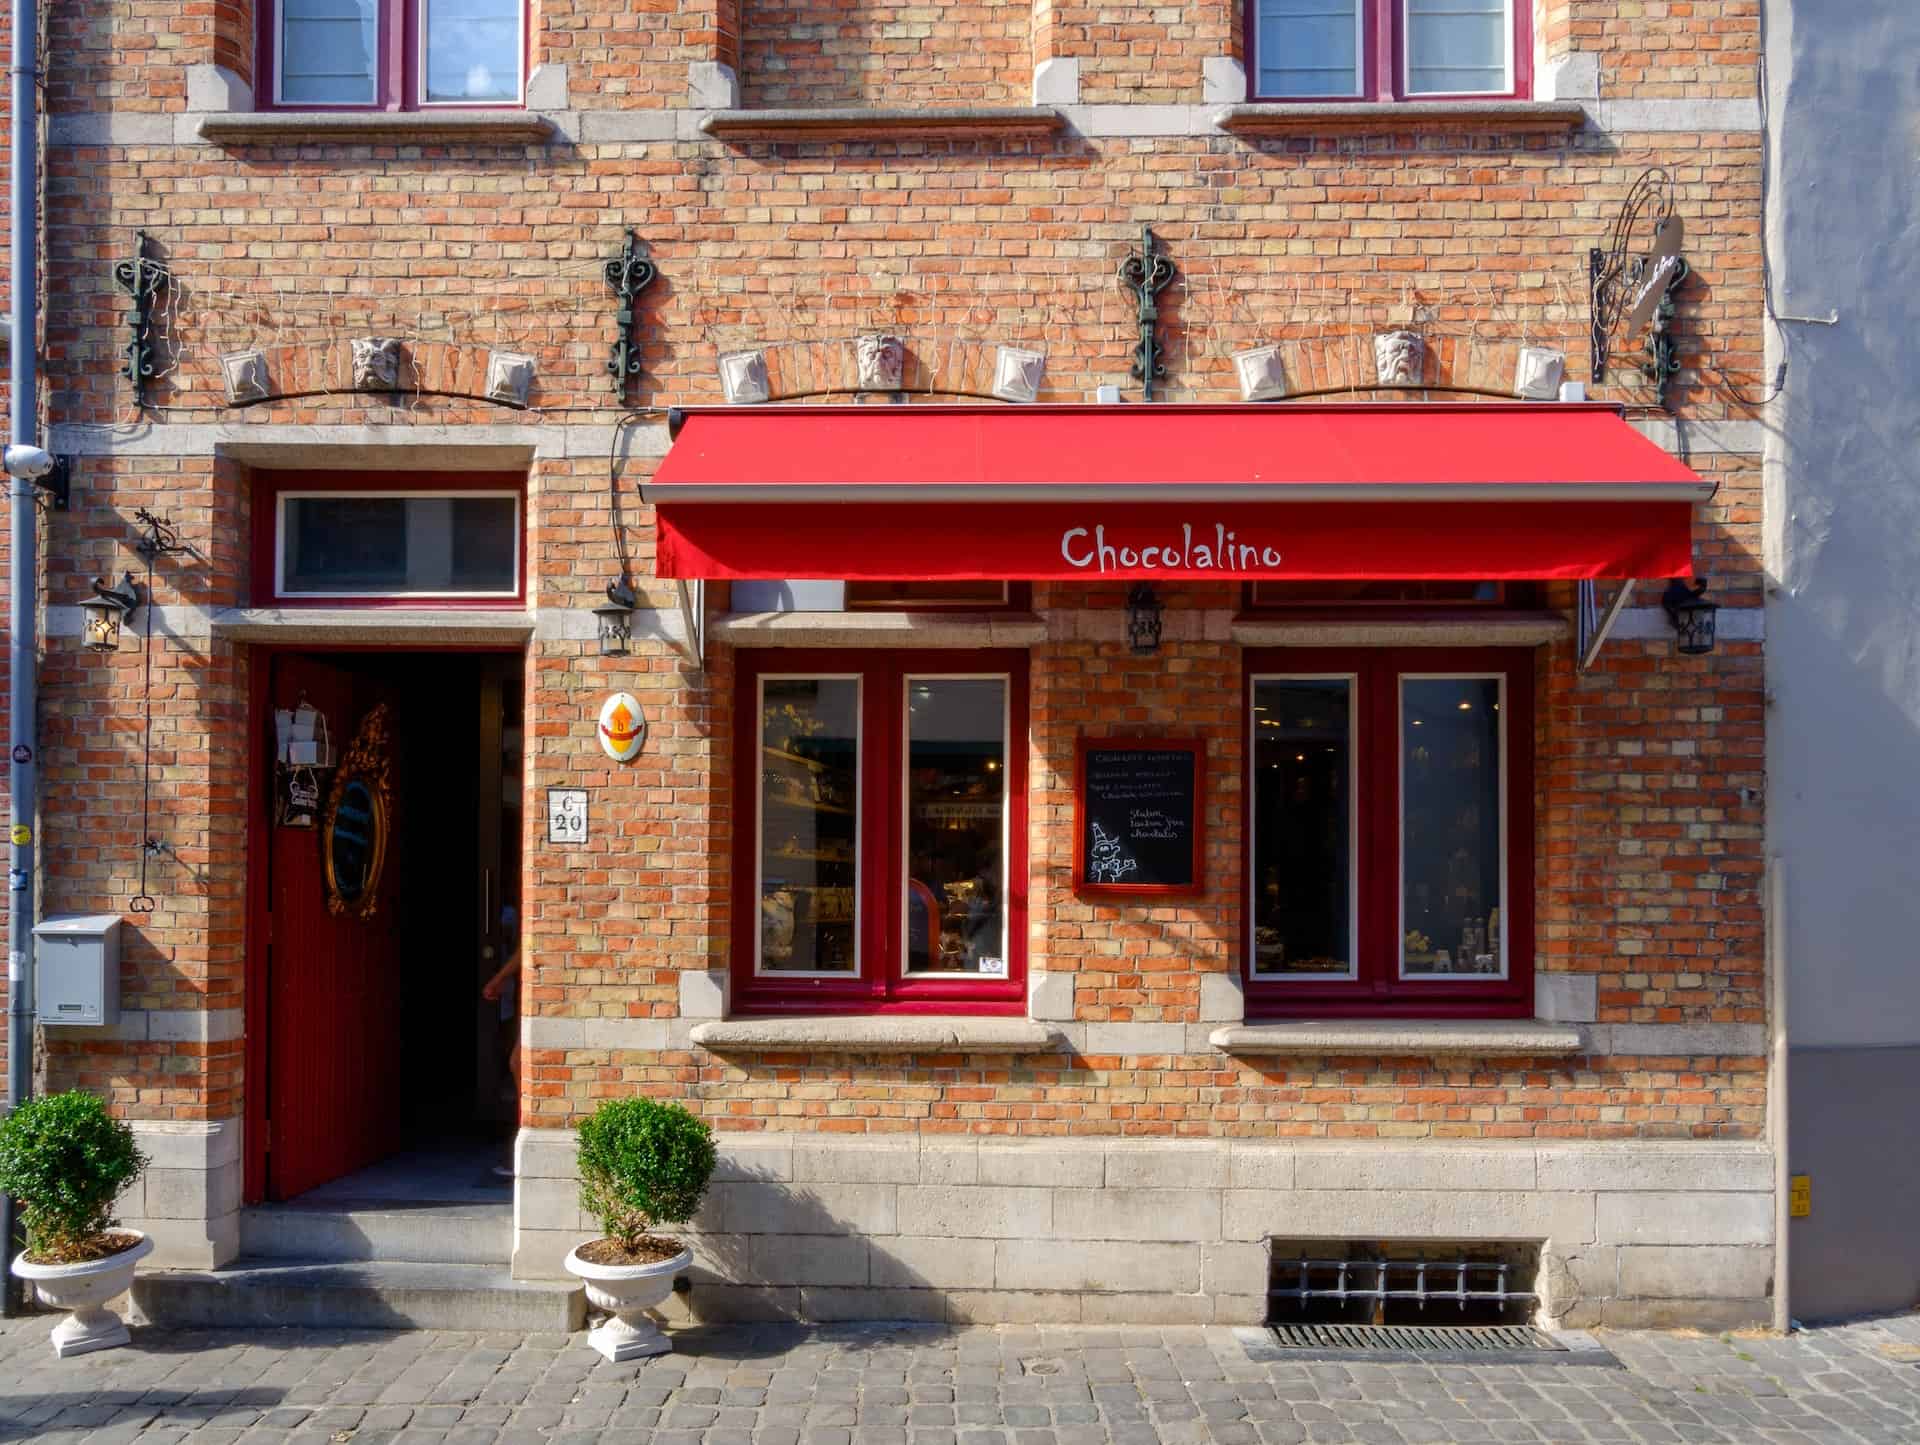 Best things to do in Bruges Belgium - Shane Mahoney - Artisan chocolates from Chocololino by Antonio Sessa on Unsplash